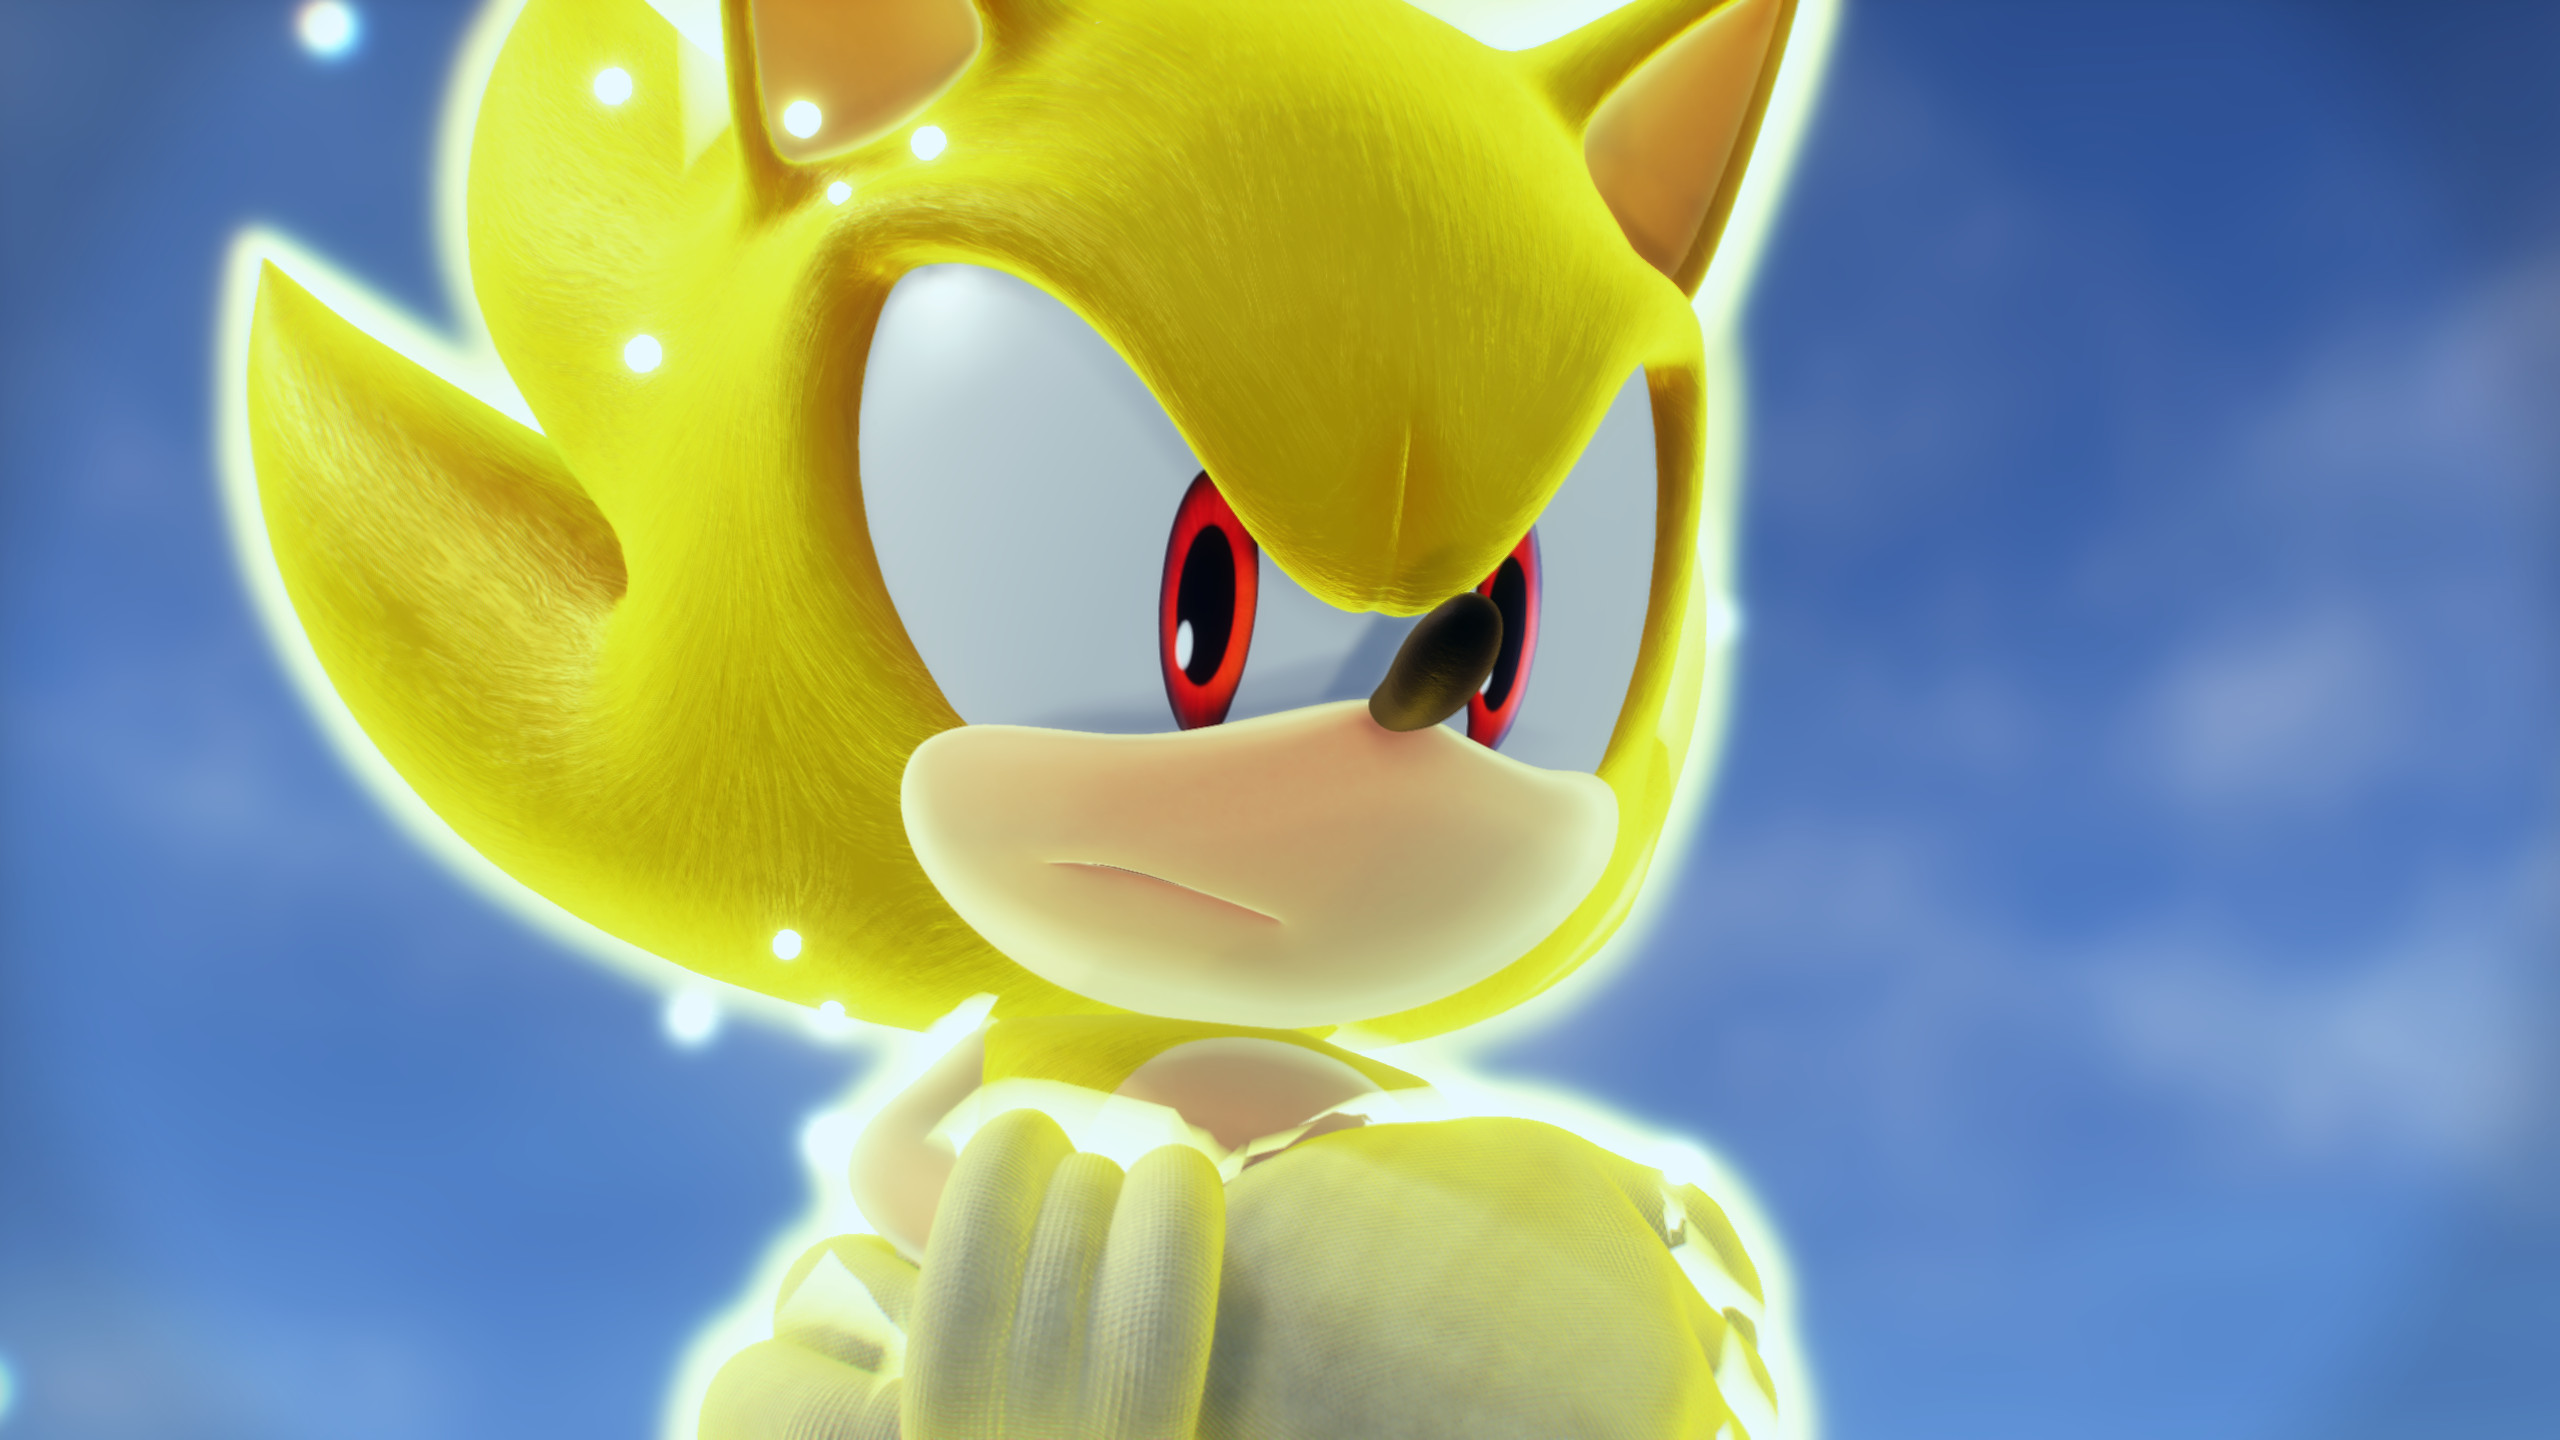 4 Dark sonic textures for Sonic.exe mod [Sonic World DX] [Mods]